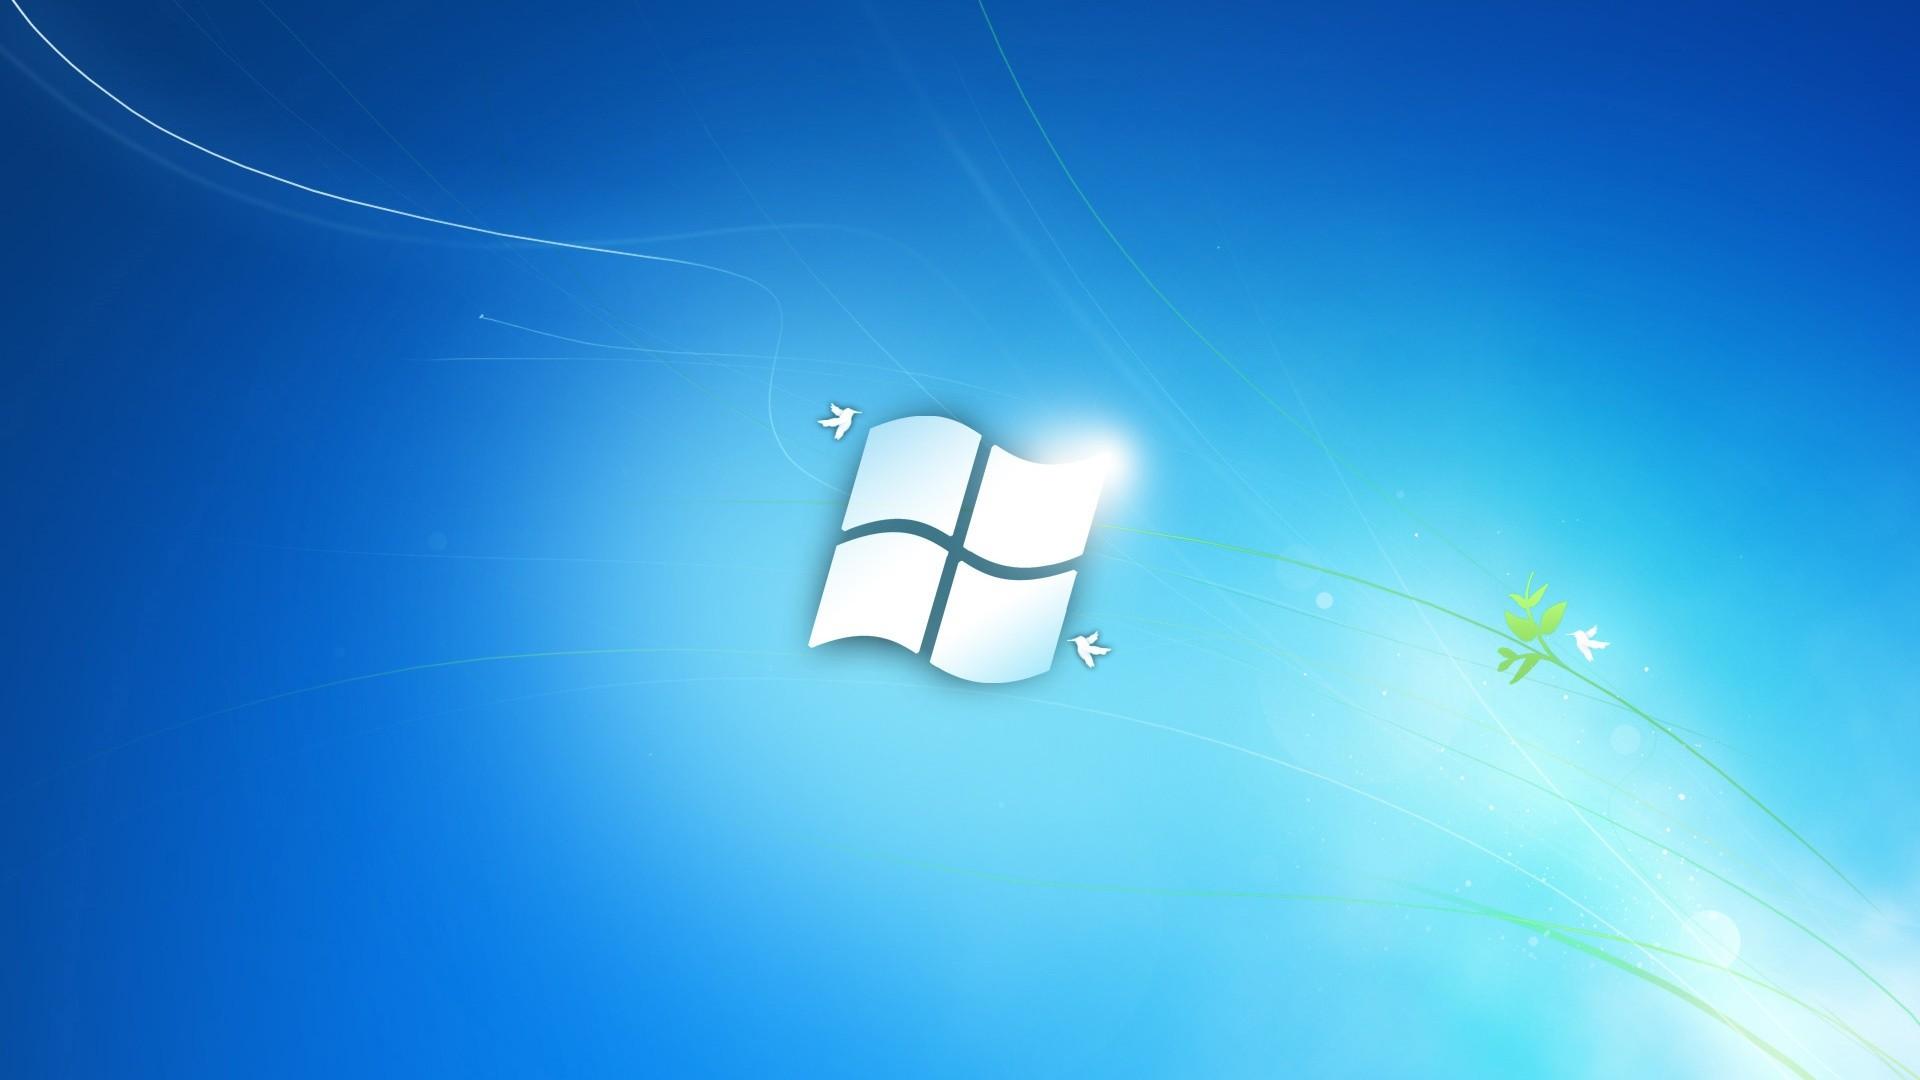 Windows 7 Background - Windows 7 Background Size - 1920x1080 Wallpaper -  